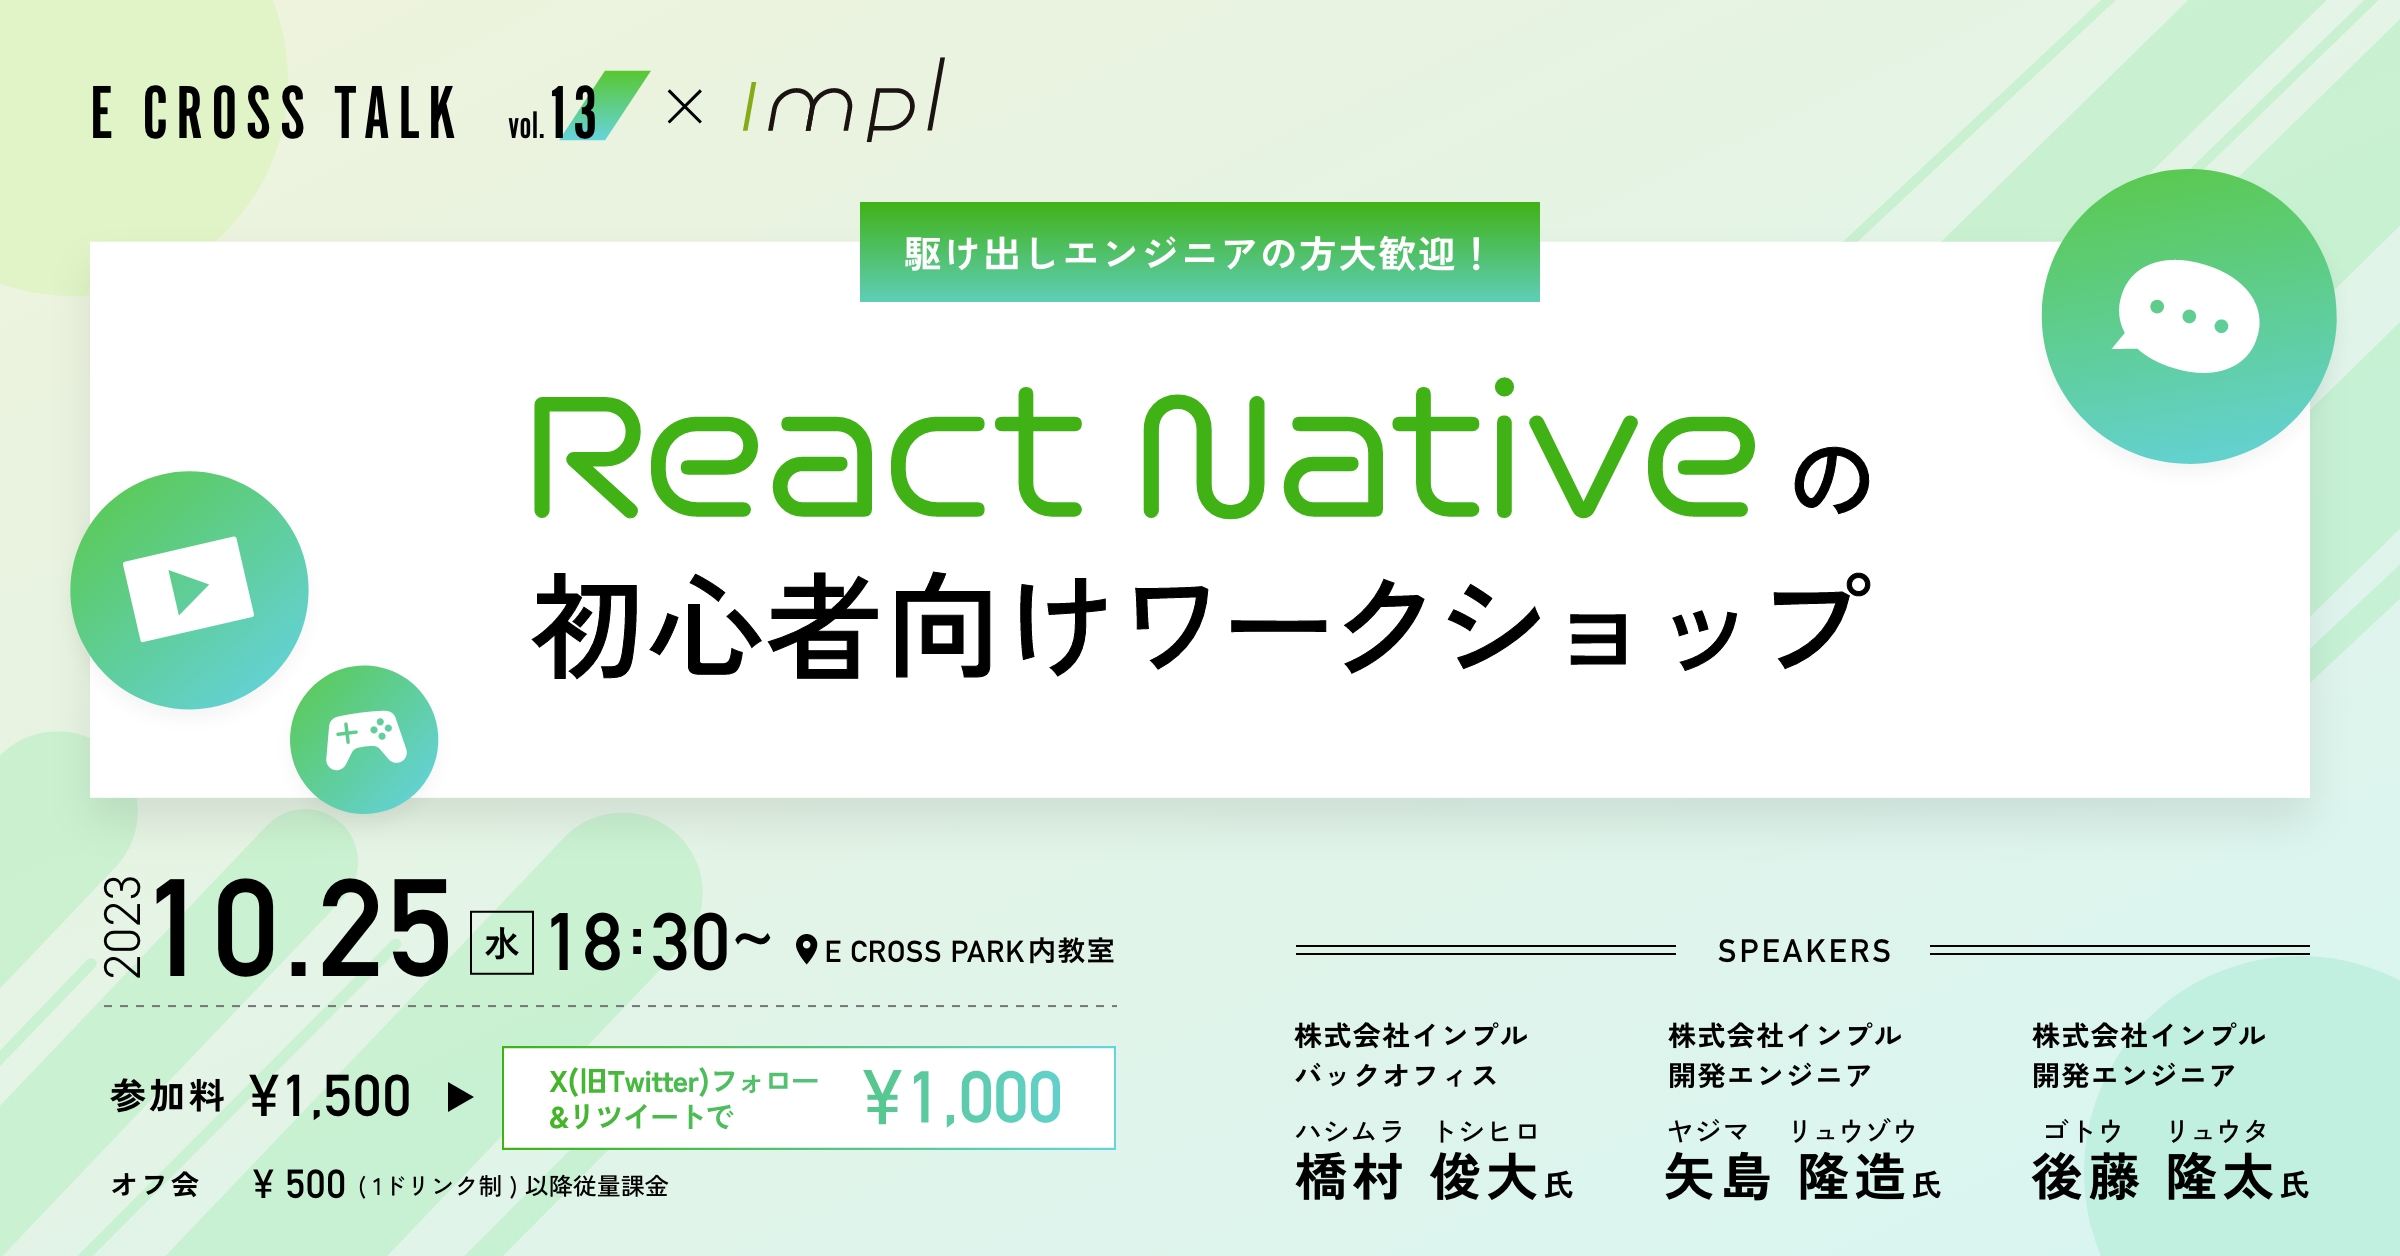 React Nativeの初心者向けワークショップ<br>E CROSS TALK vol.13